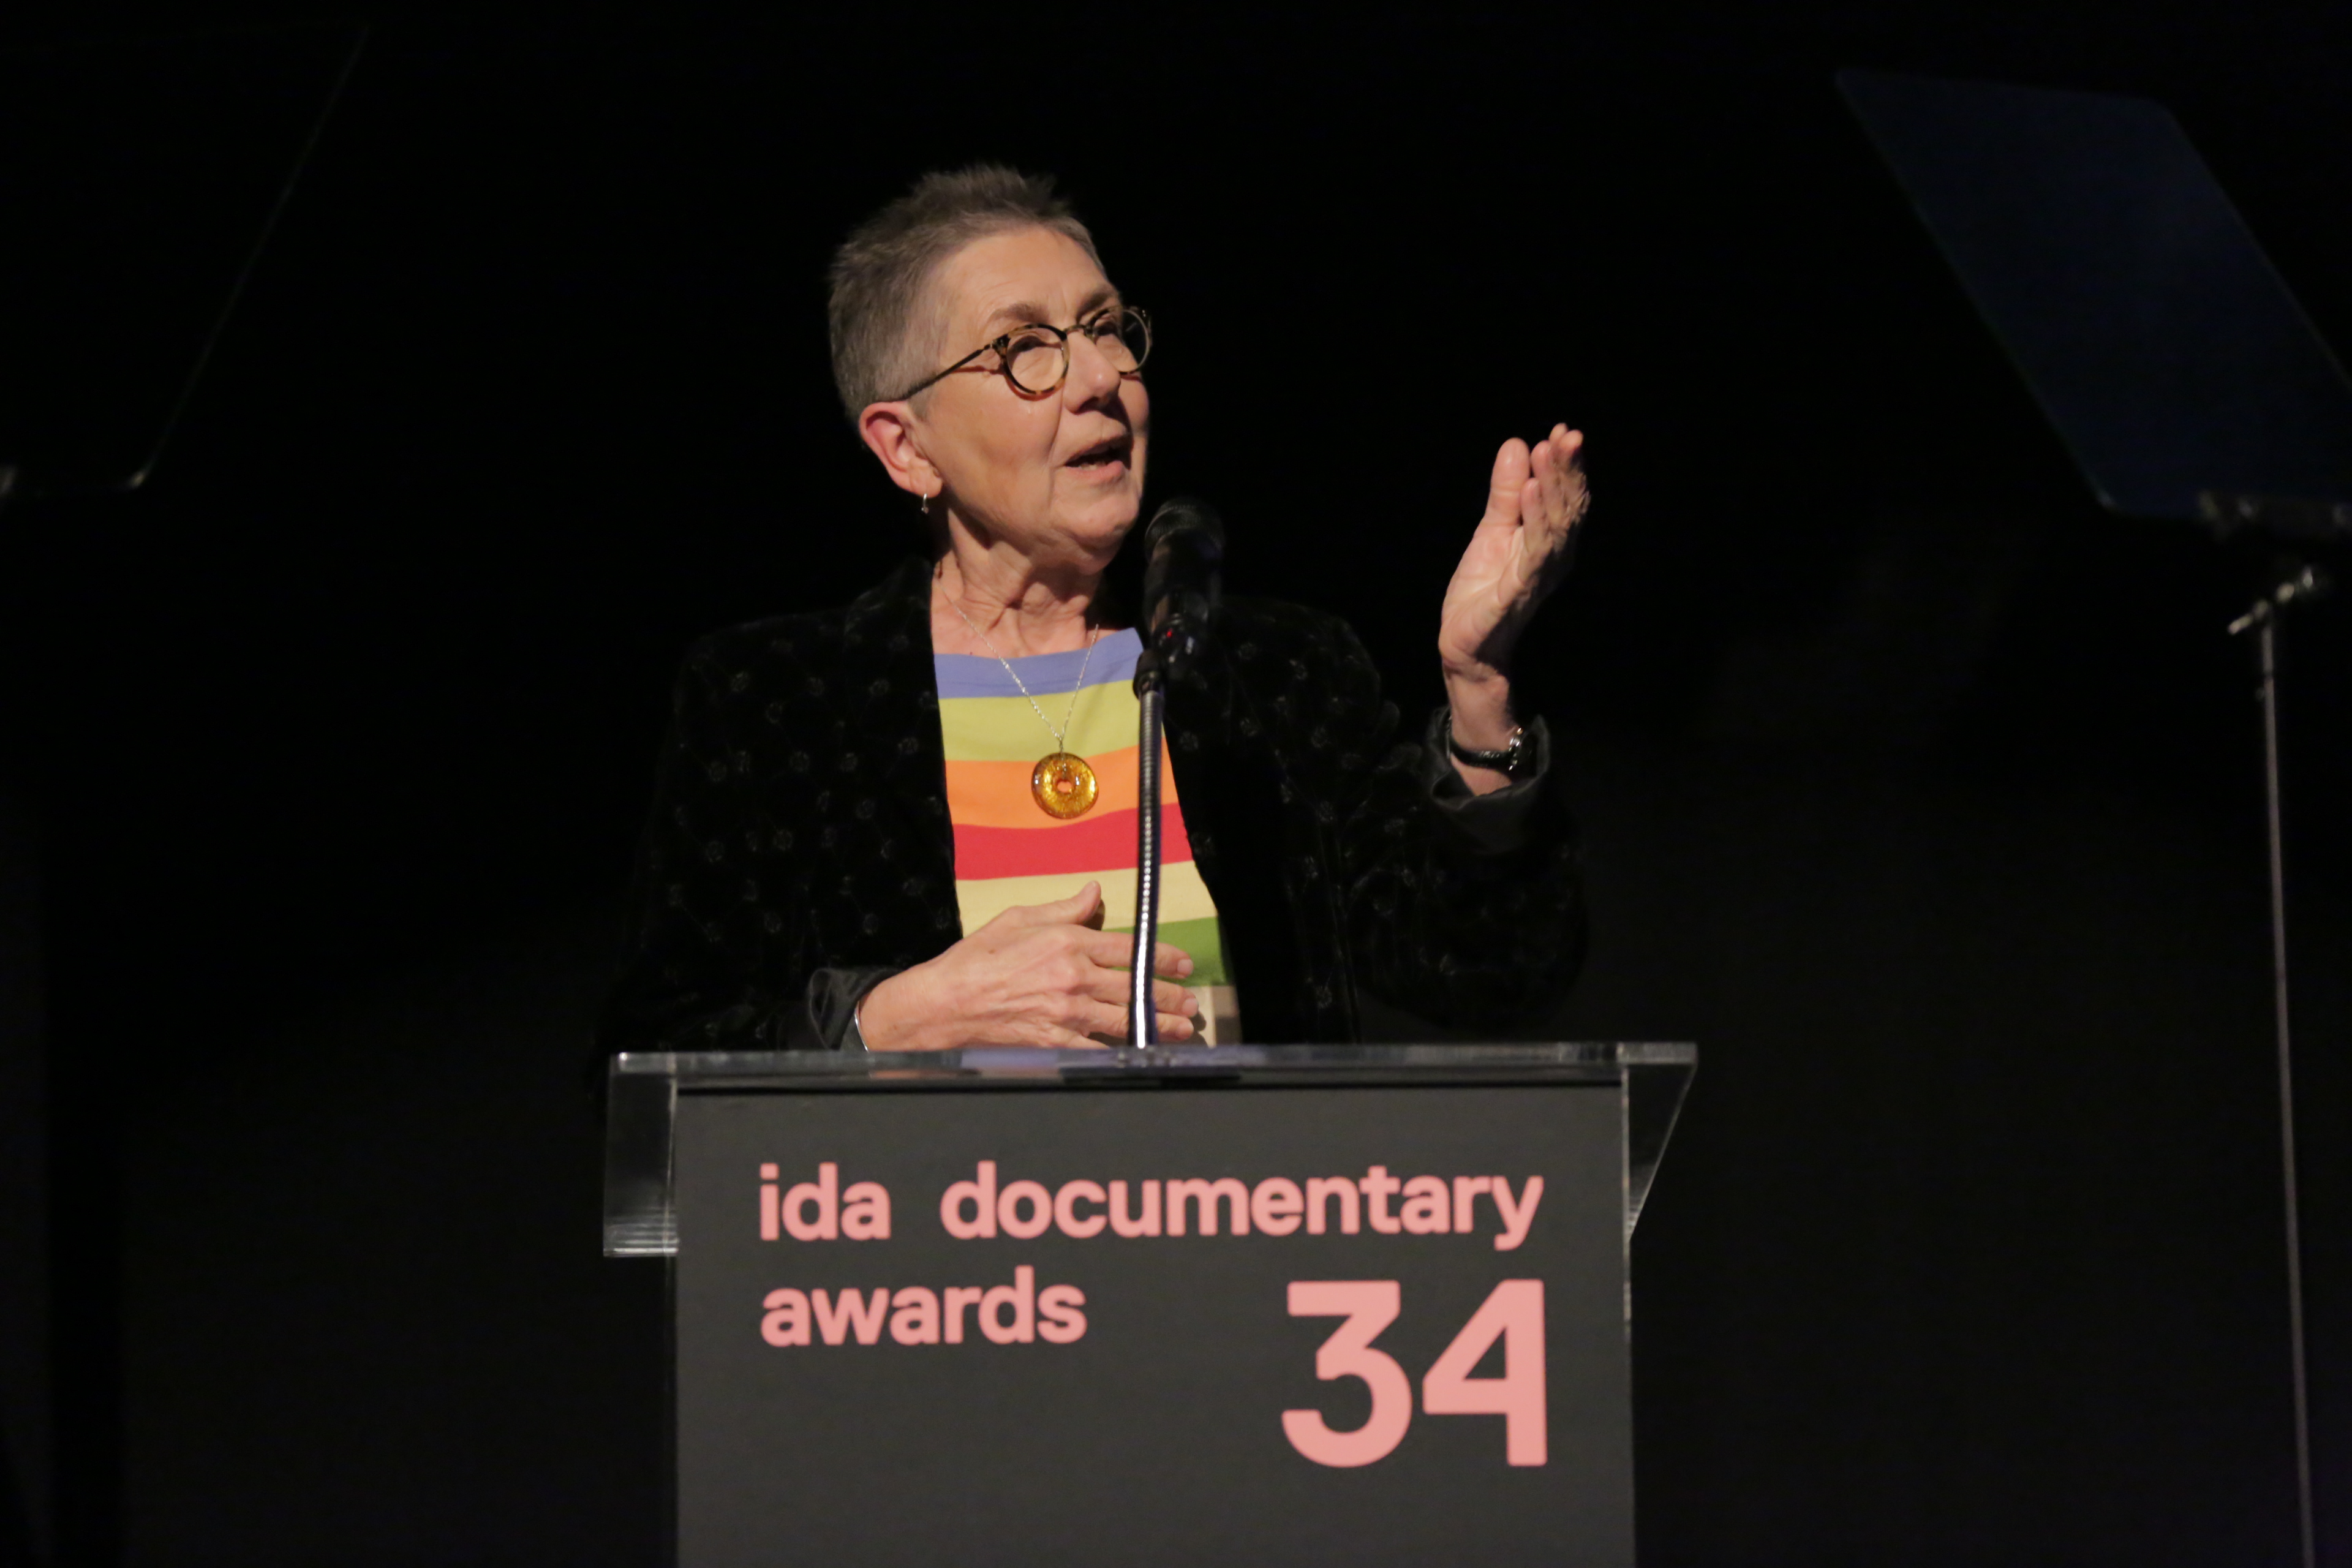 Julia Reichert, a white woman with grey hair and glasses, wearing a striped shirt beneath a dark blazer, at the podium accepting the 2018 IDA Career Achievement Award. Photo: Rebecca Sapp